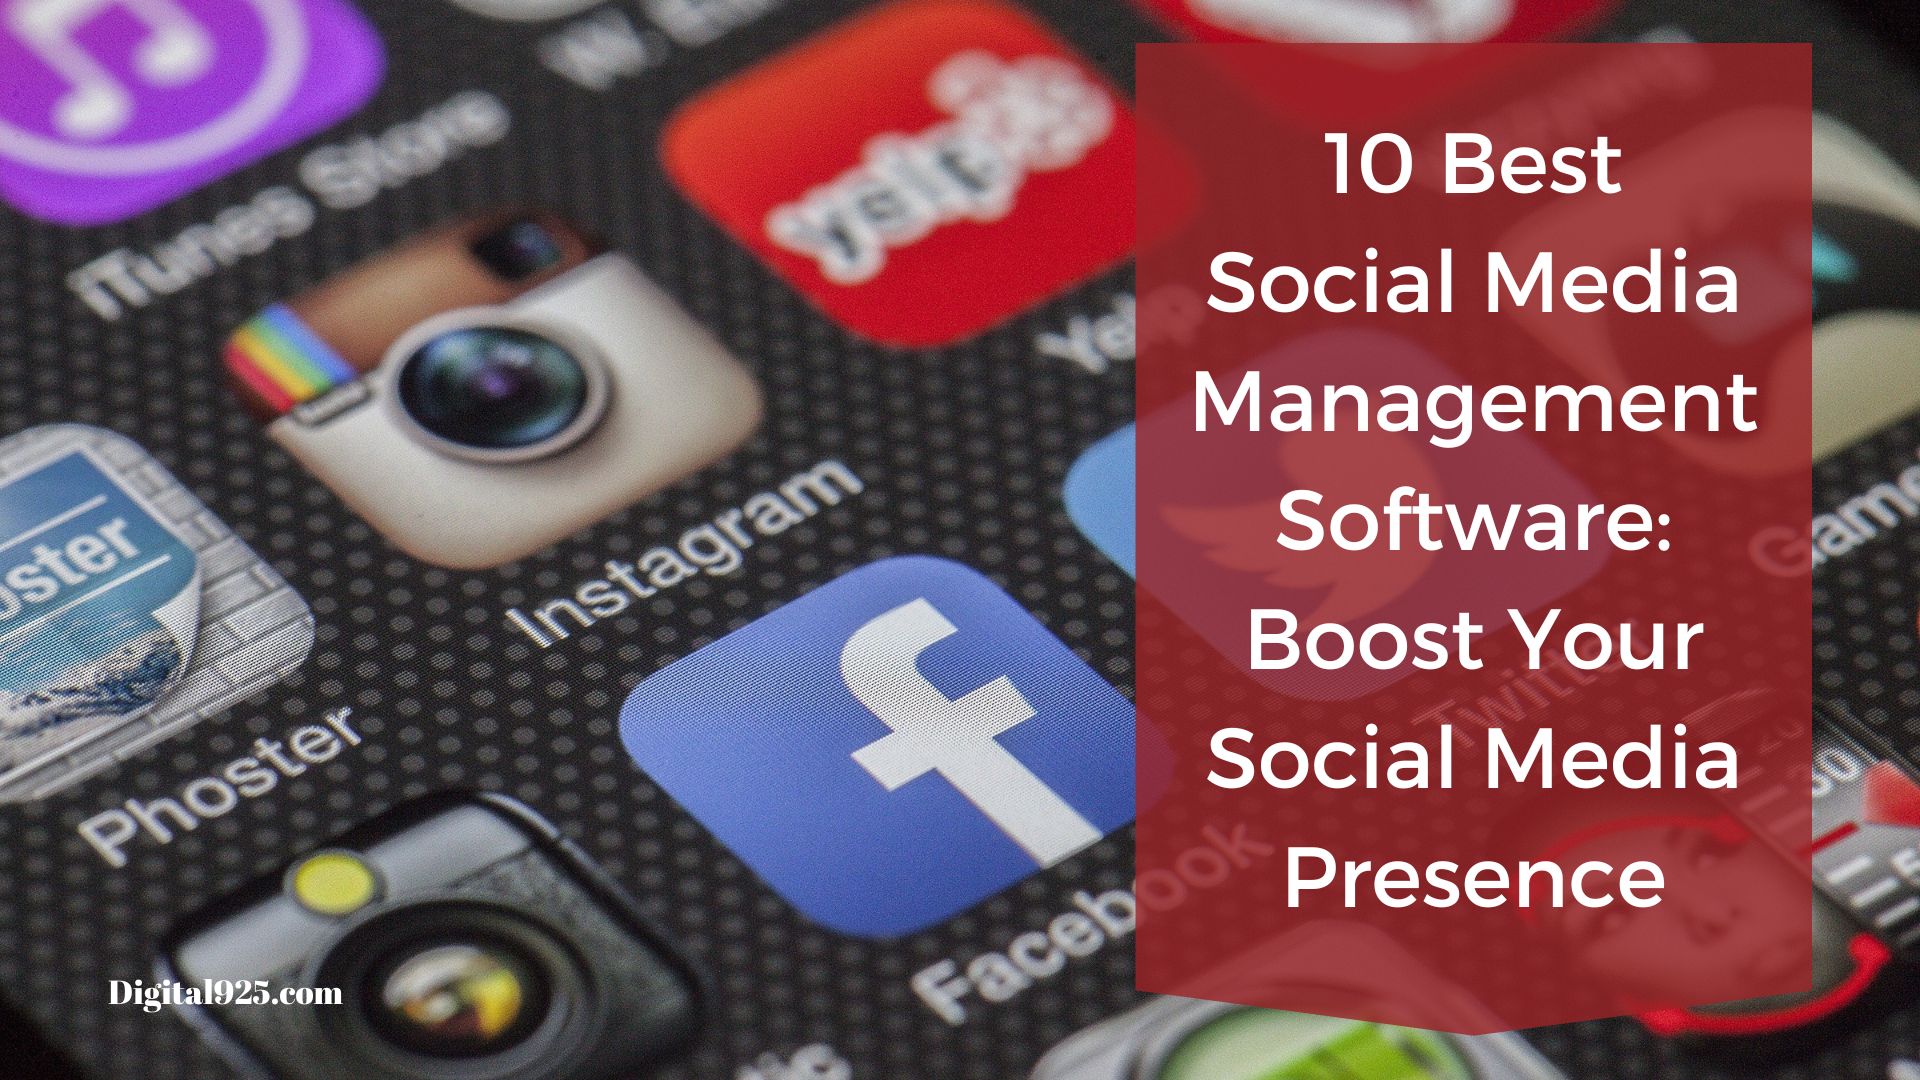 10 Best Social Media Management Software: Boost Your Social Media Presence